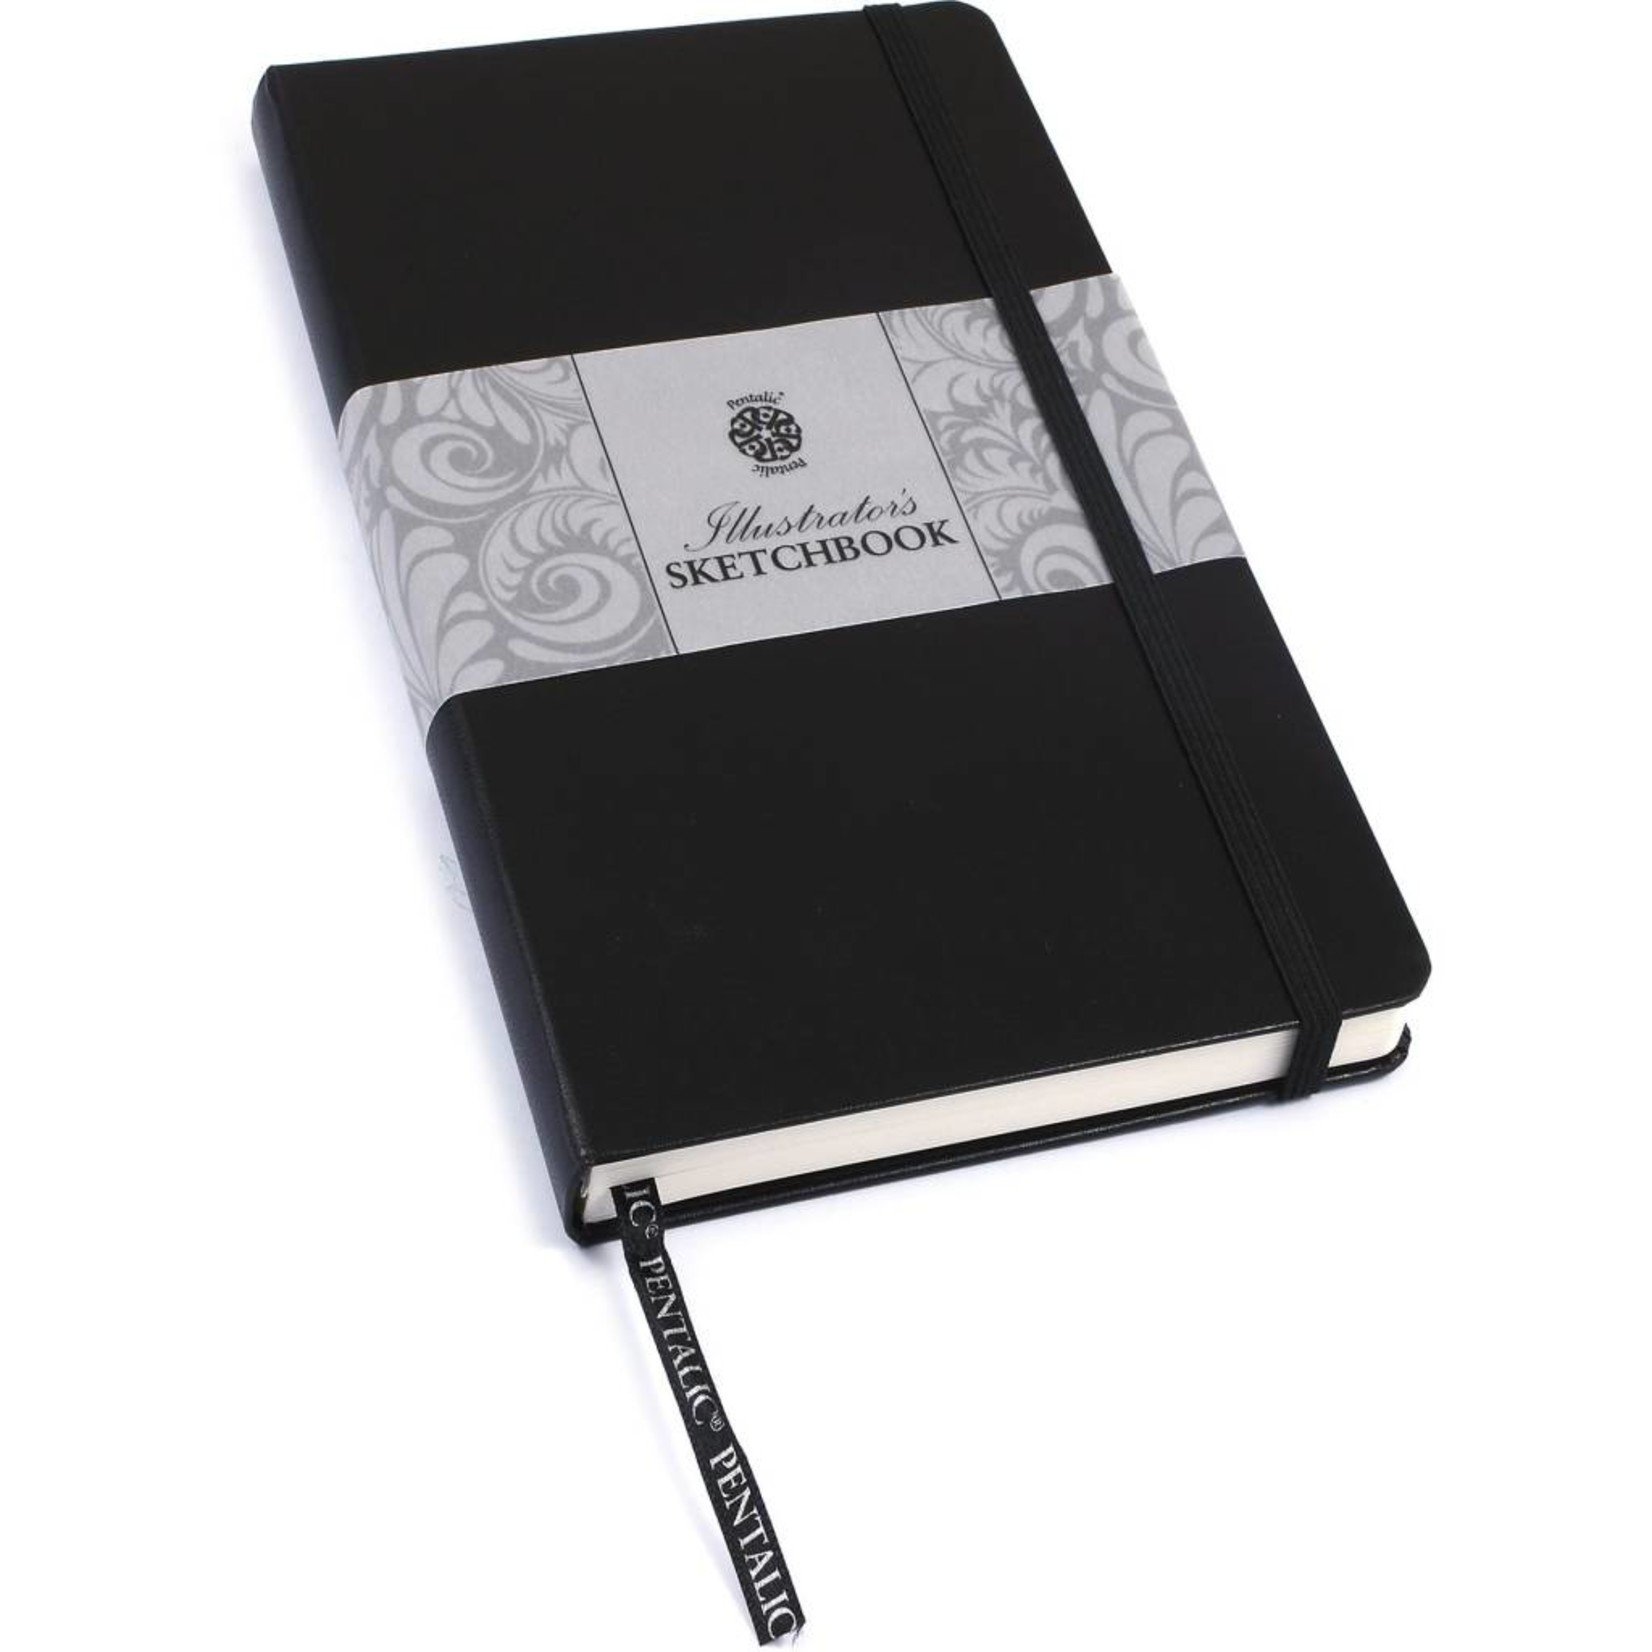 Pentalic Illustrators Sketchbook 5.5x3.5 Black Espresso